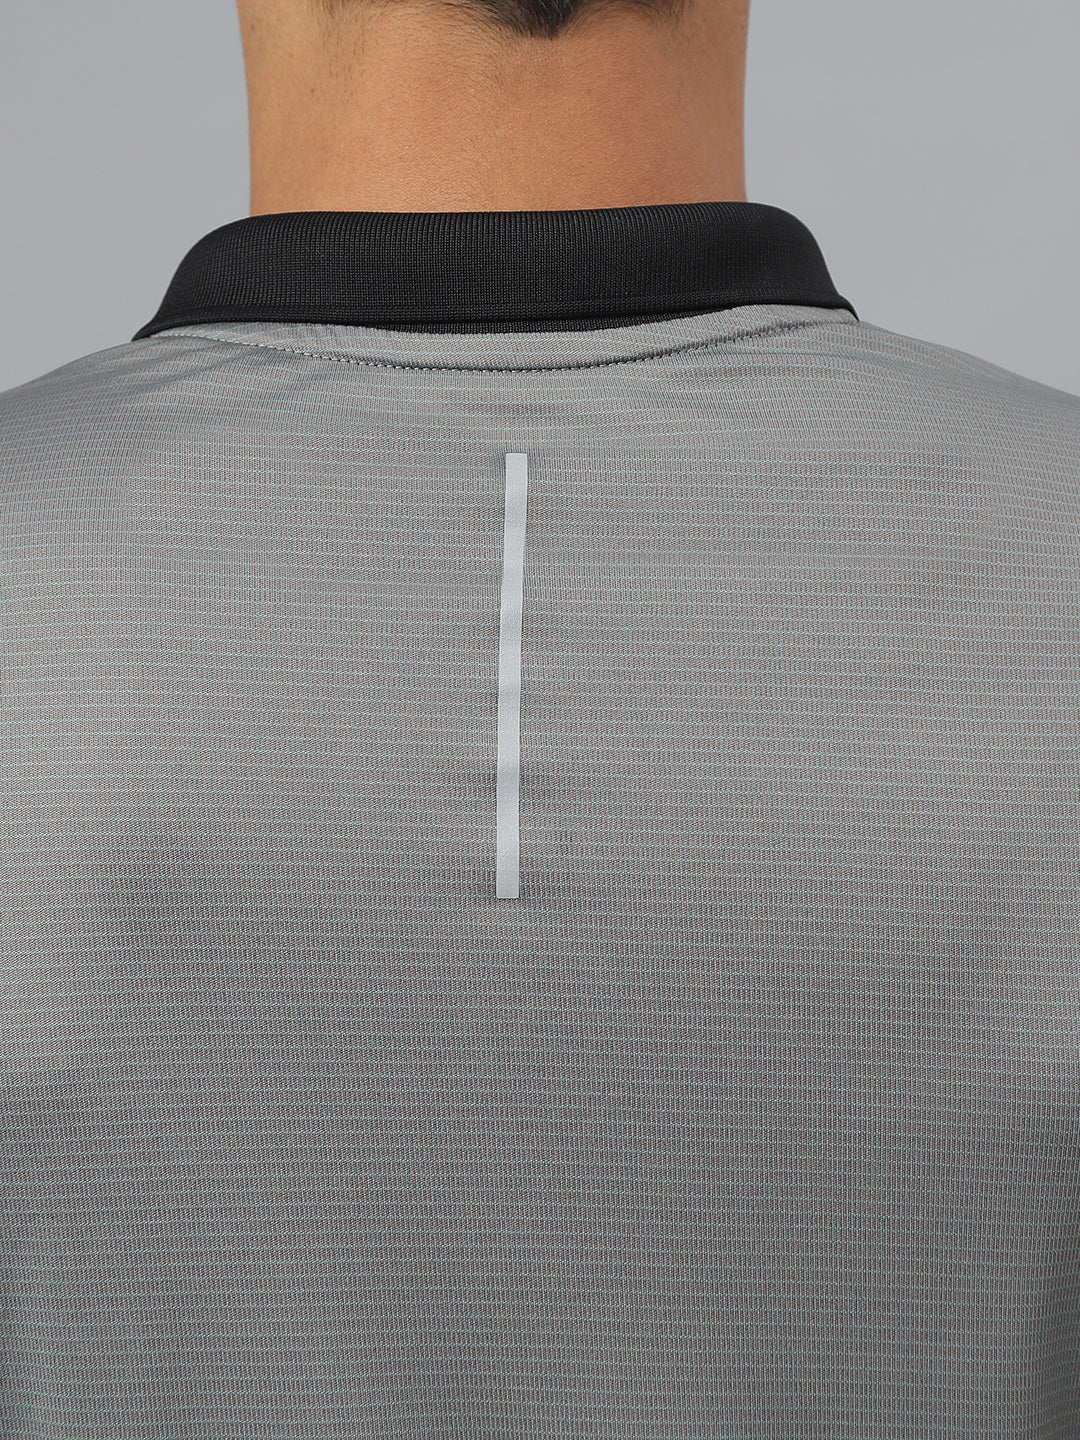 Alcis Men Dark Grey Drytech+ Anti-Static Slim-Fit Running Polo T-Shirt